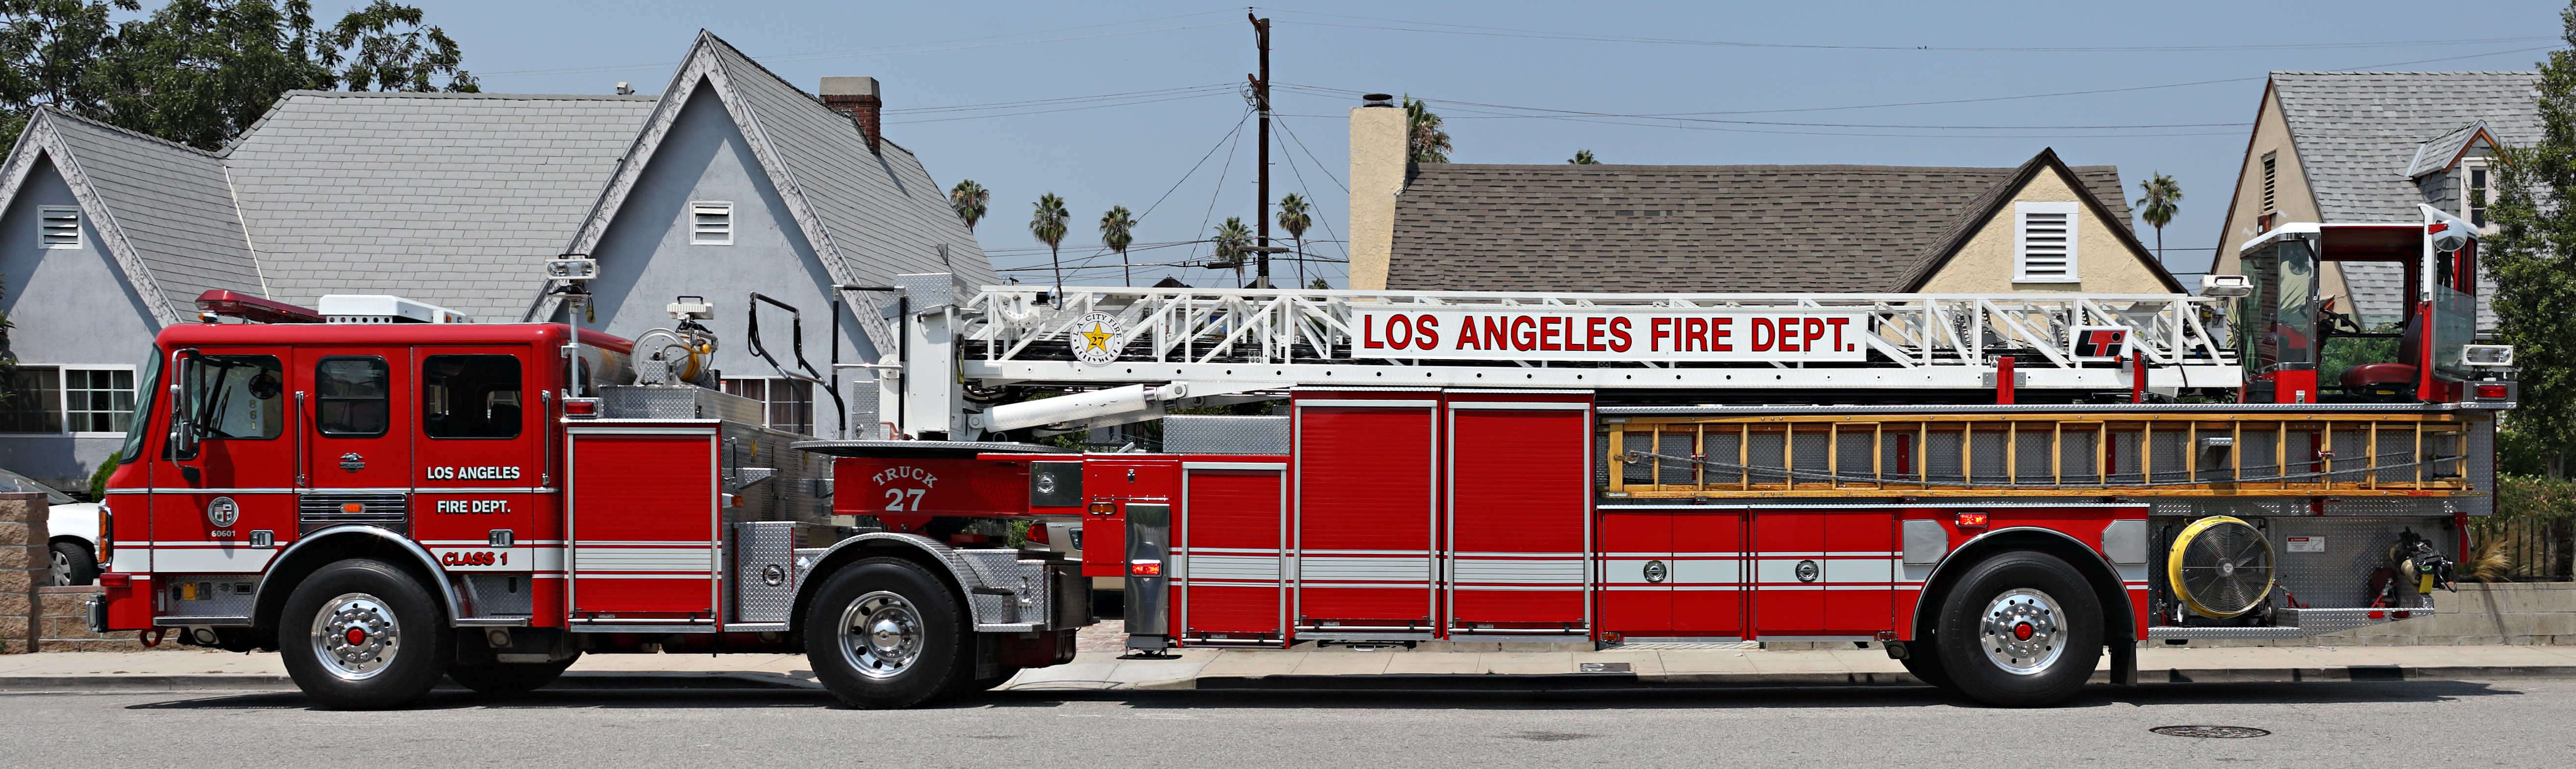 Fire engine - Wikipedia